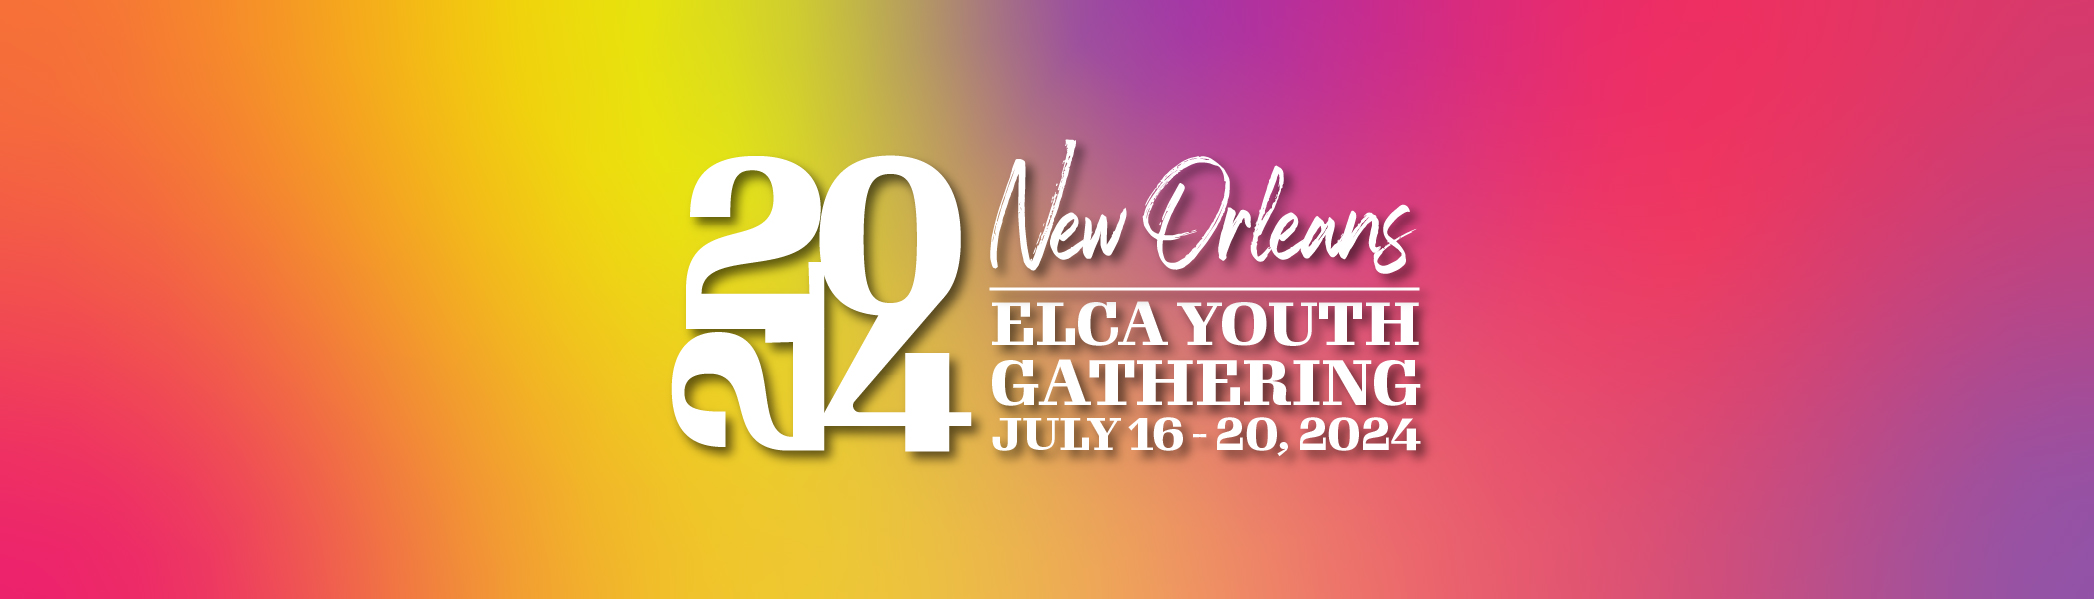 ELCA Youth Gathering